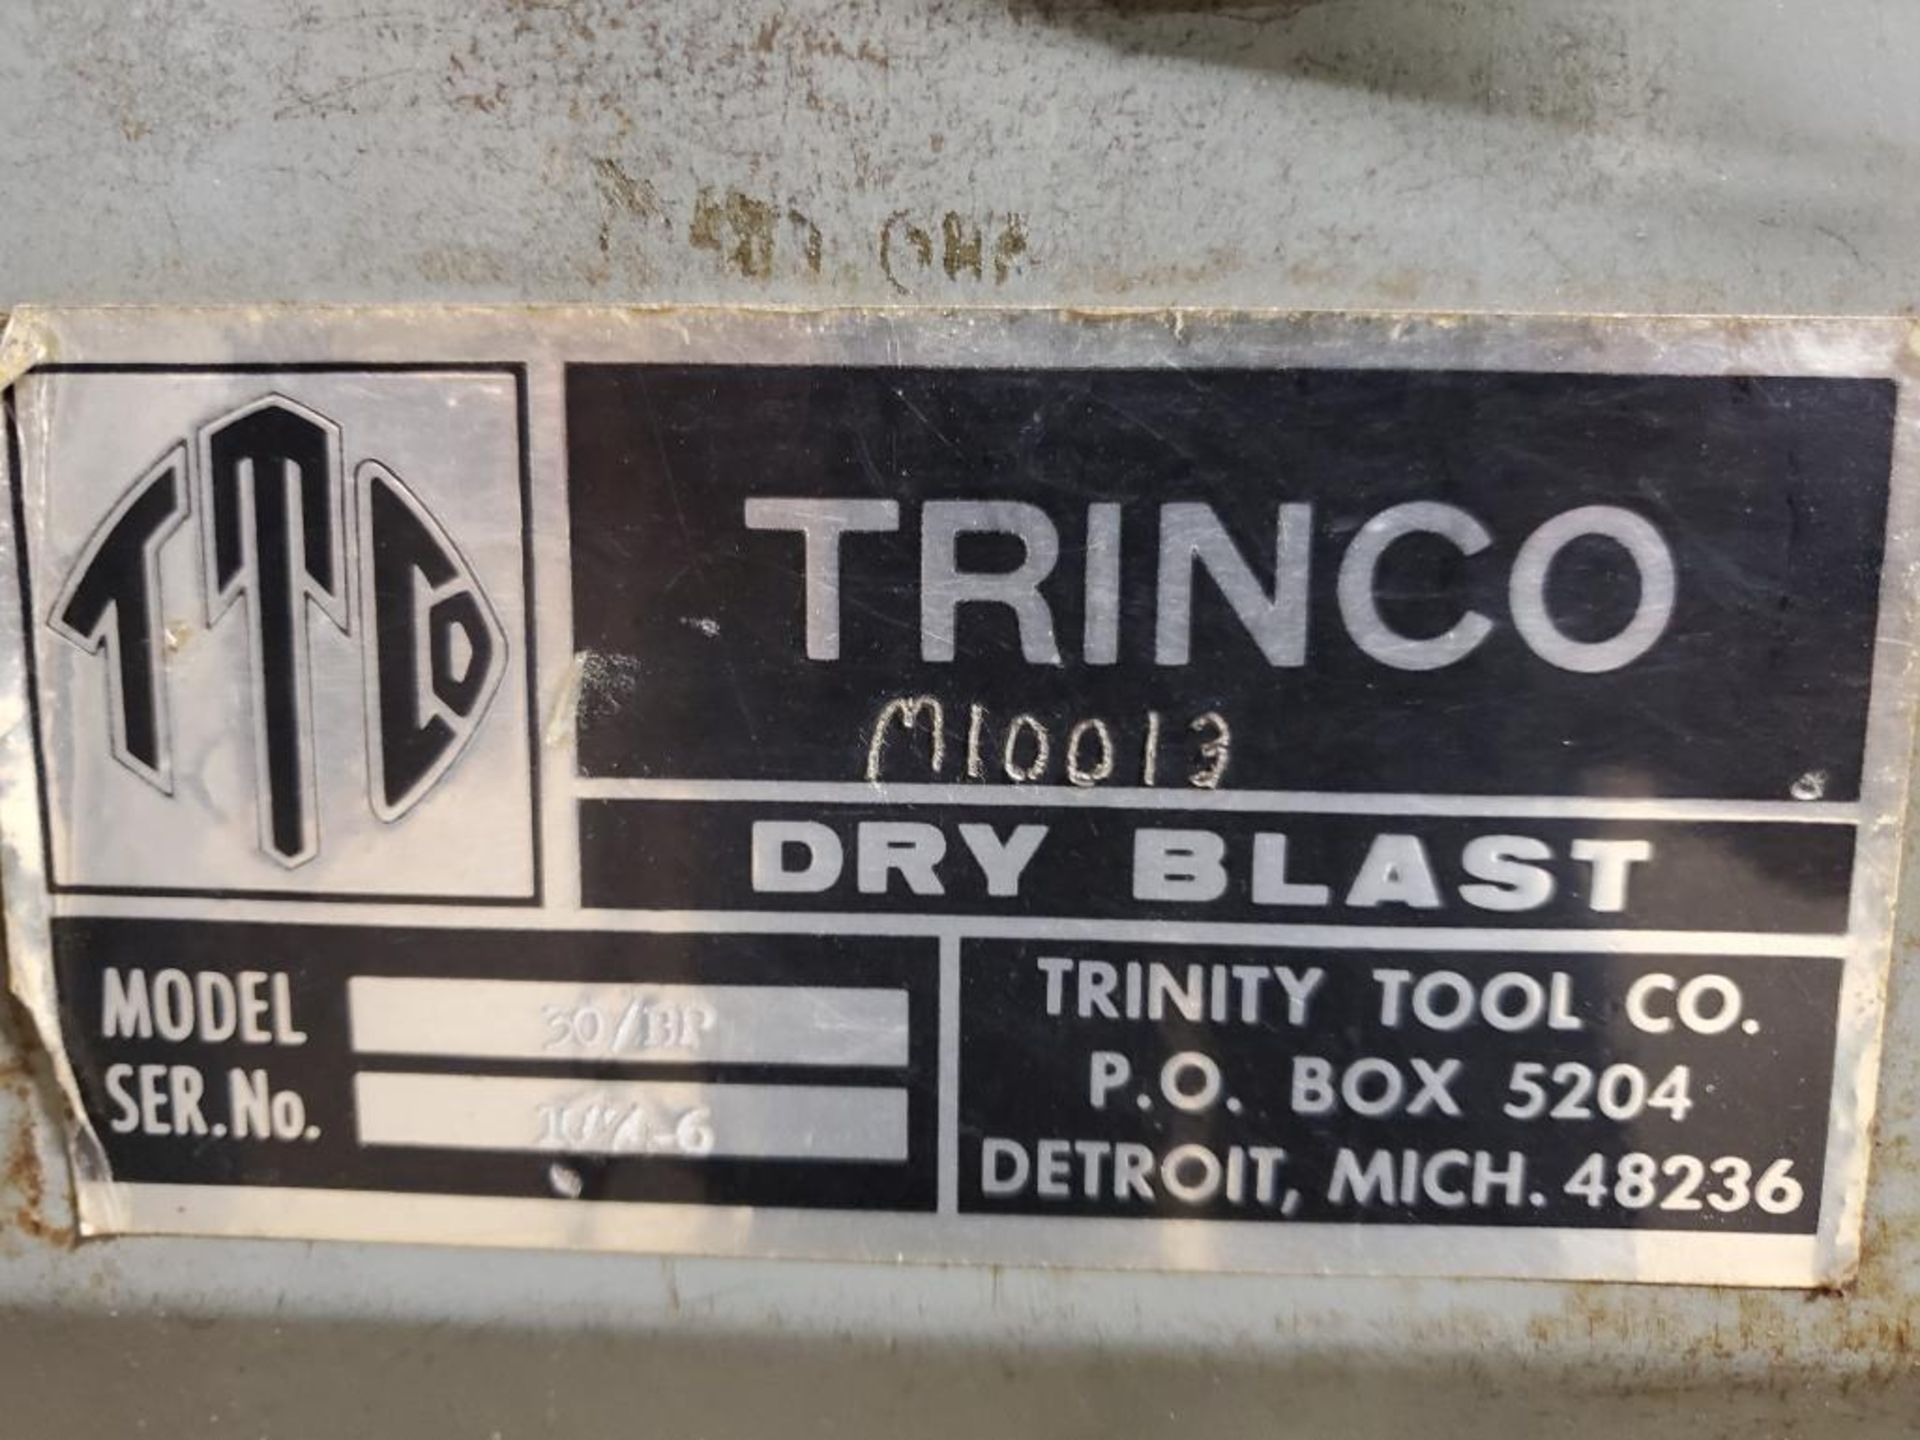 Trinco Dry Blast Cabinet, Model 30/BP, s/n 1471-6, w/ Trinco Debris Collector - Image 7 of 8